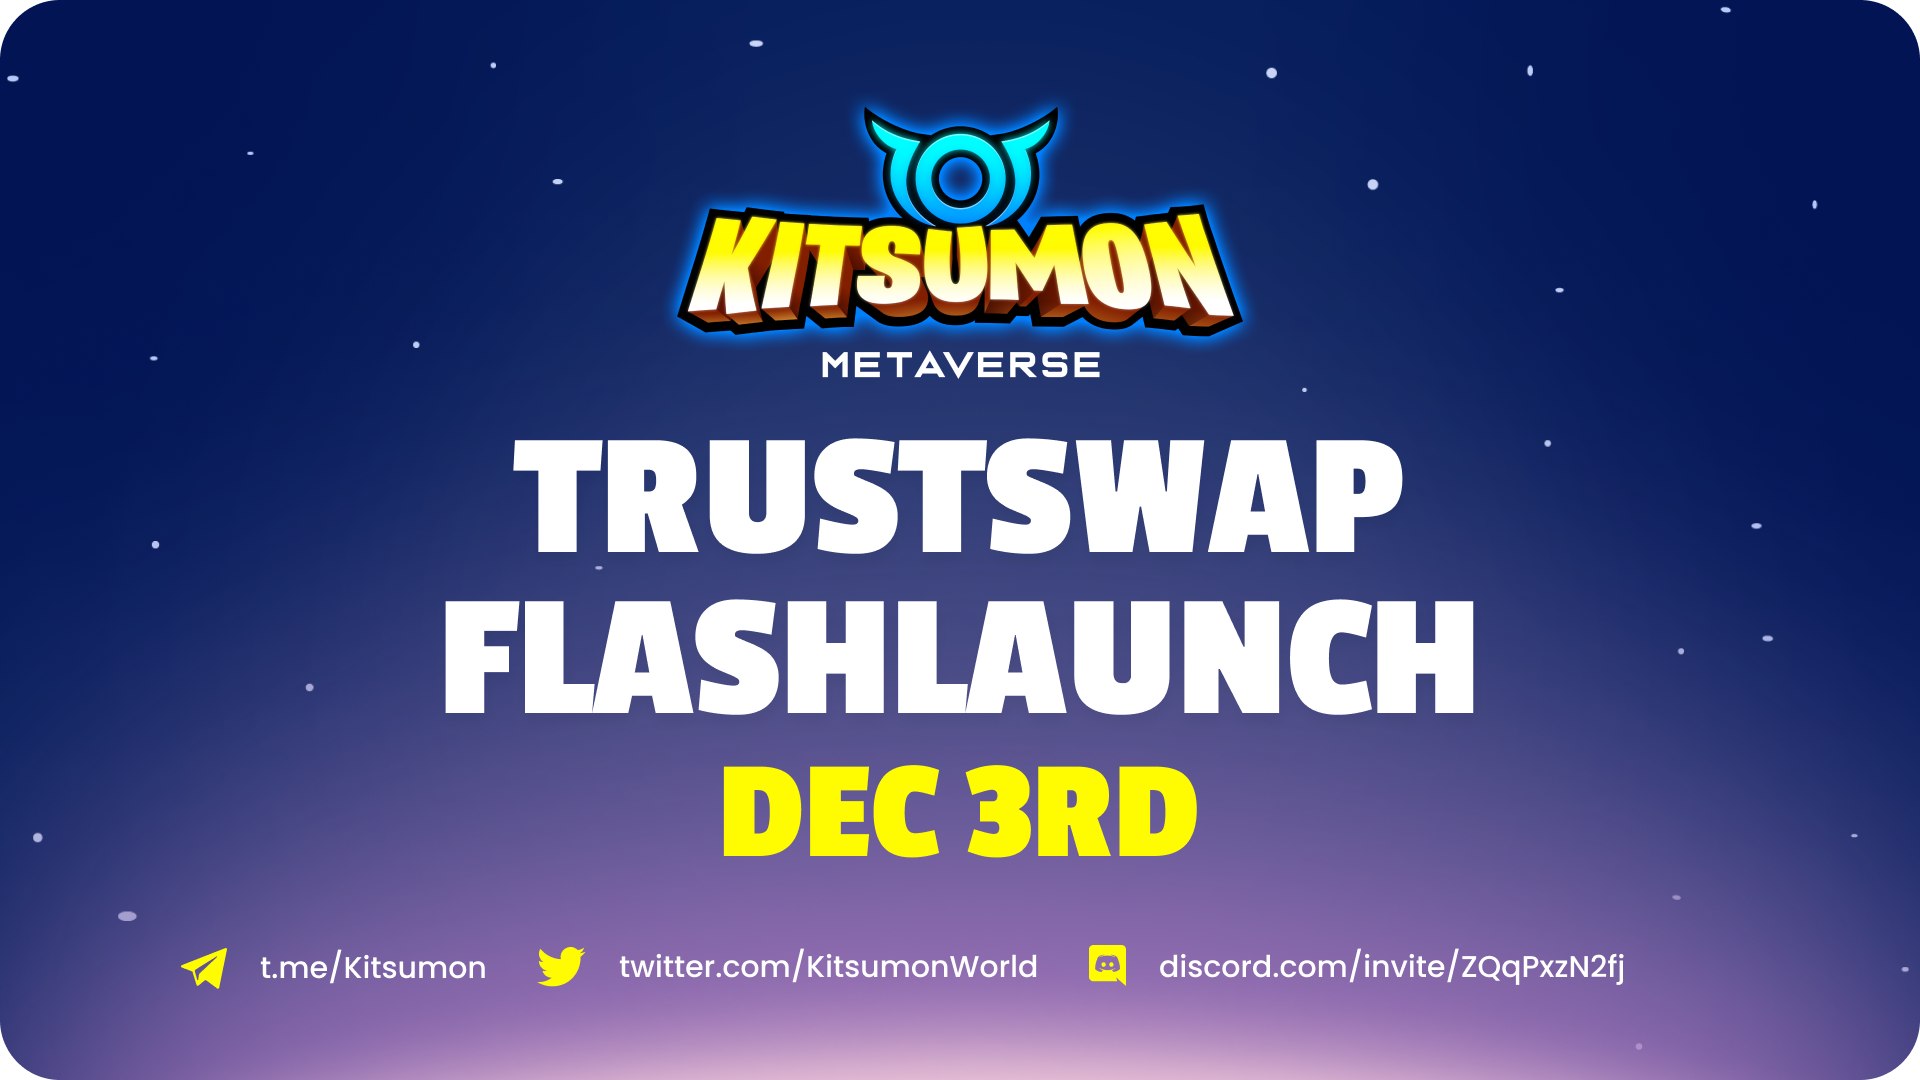 Kitsumon Announces December 3rd FlashLaunch on TrustSwap